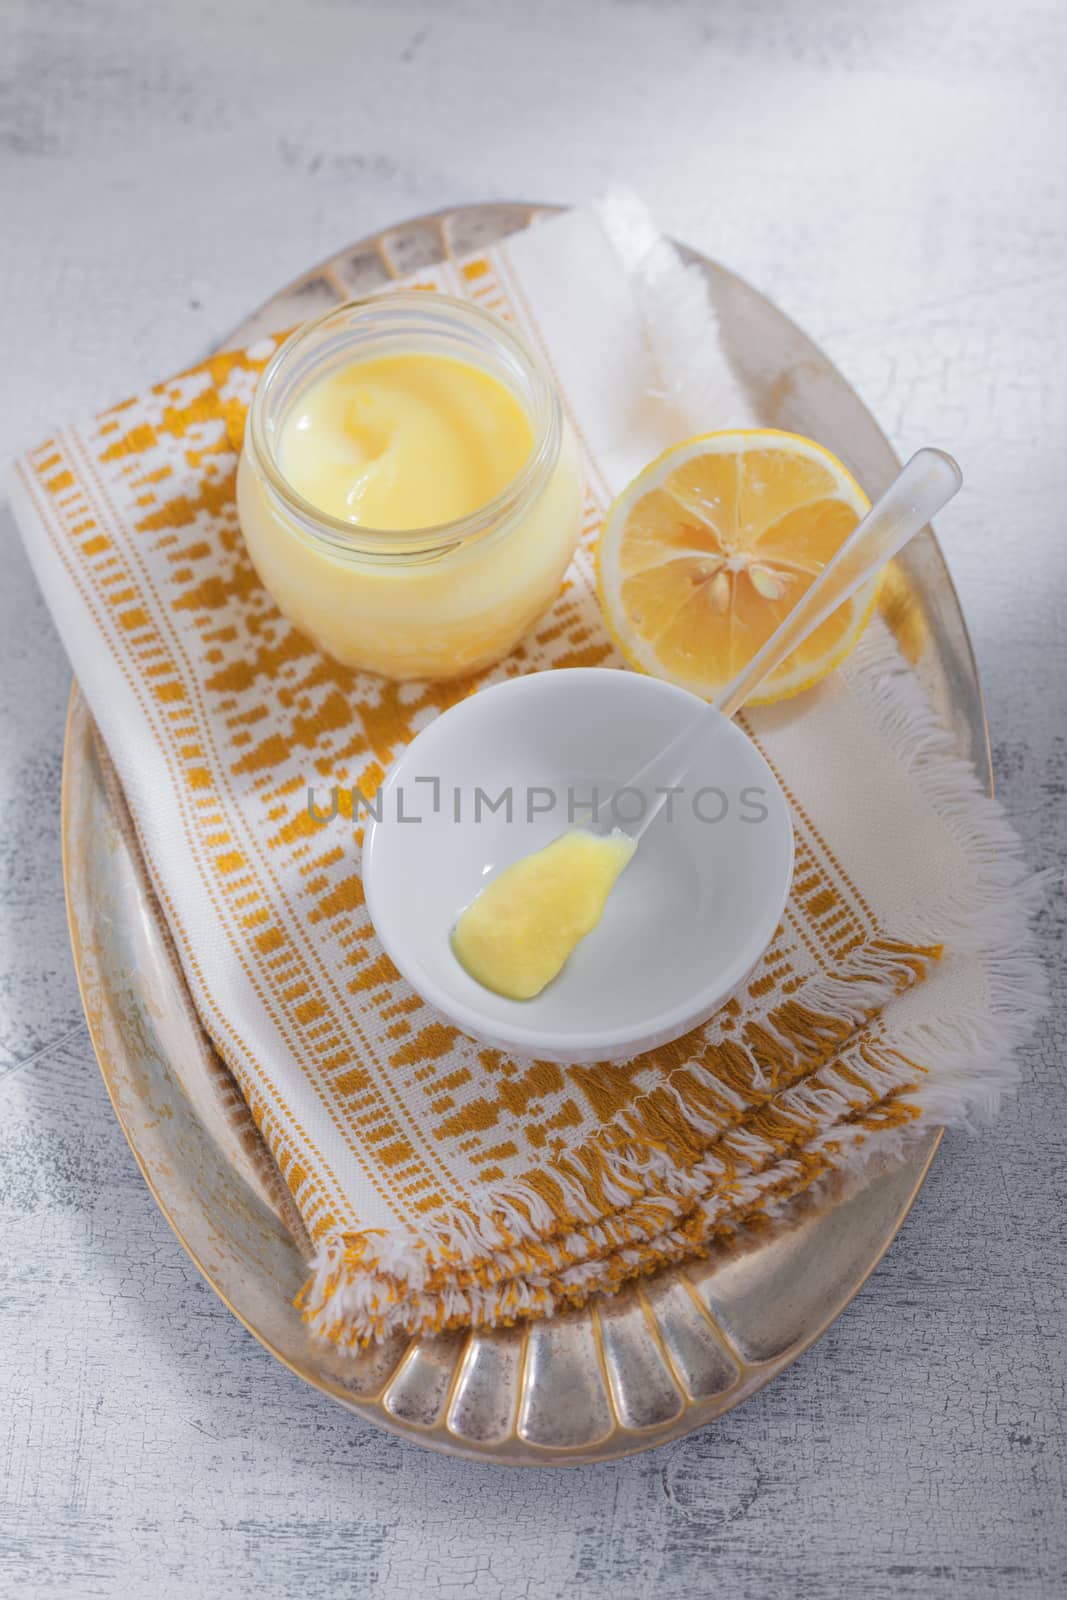 Lemon kurd with a spoon served on a table.